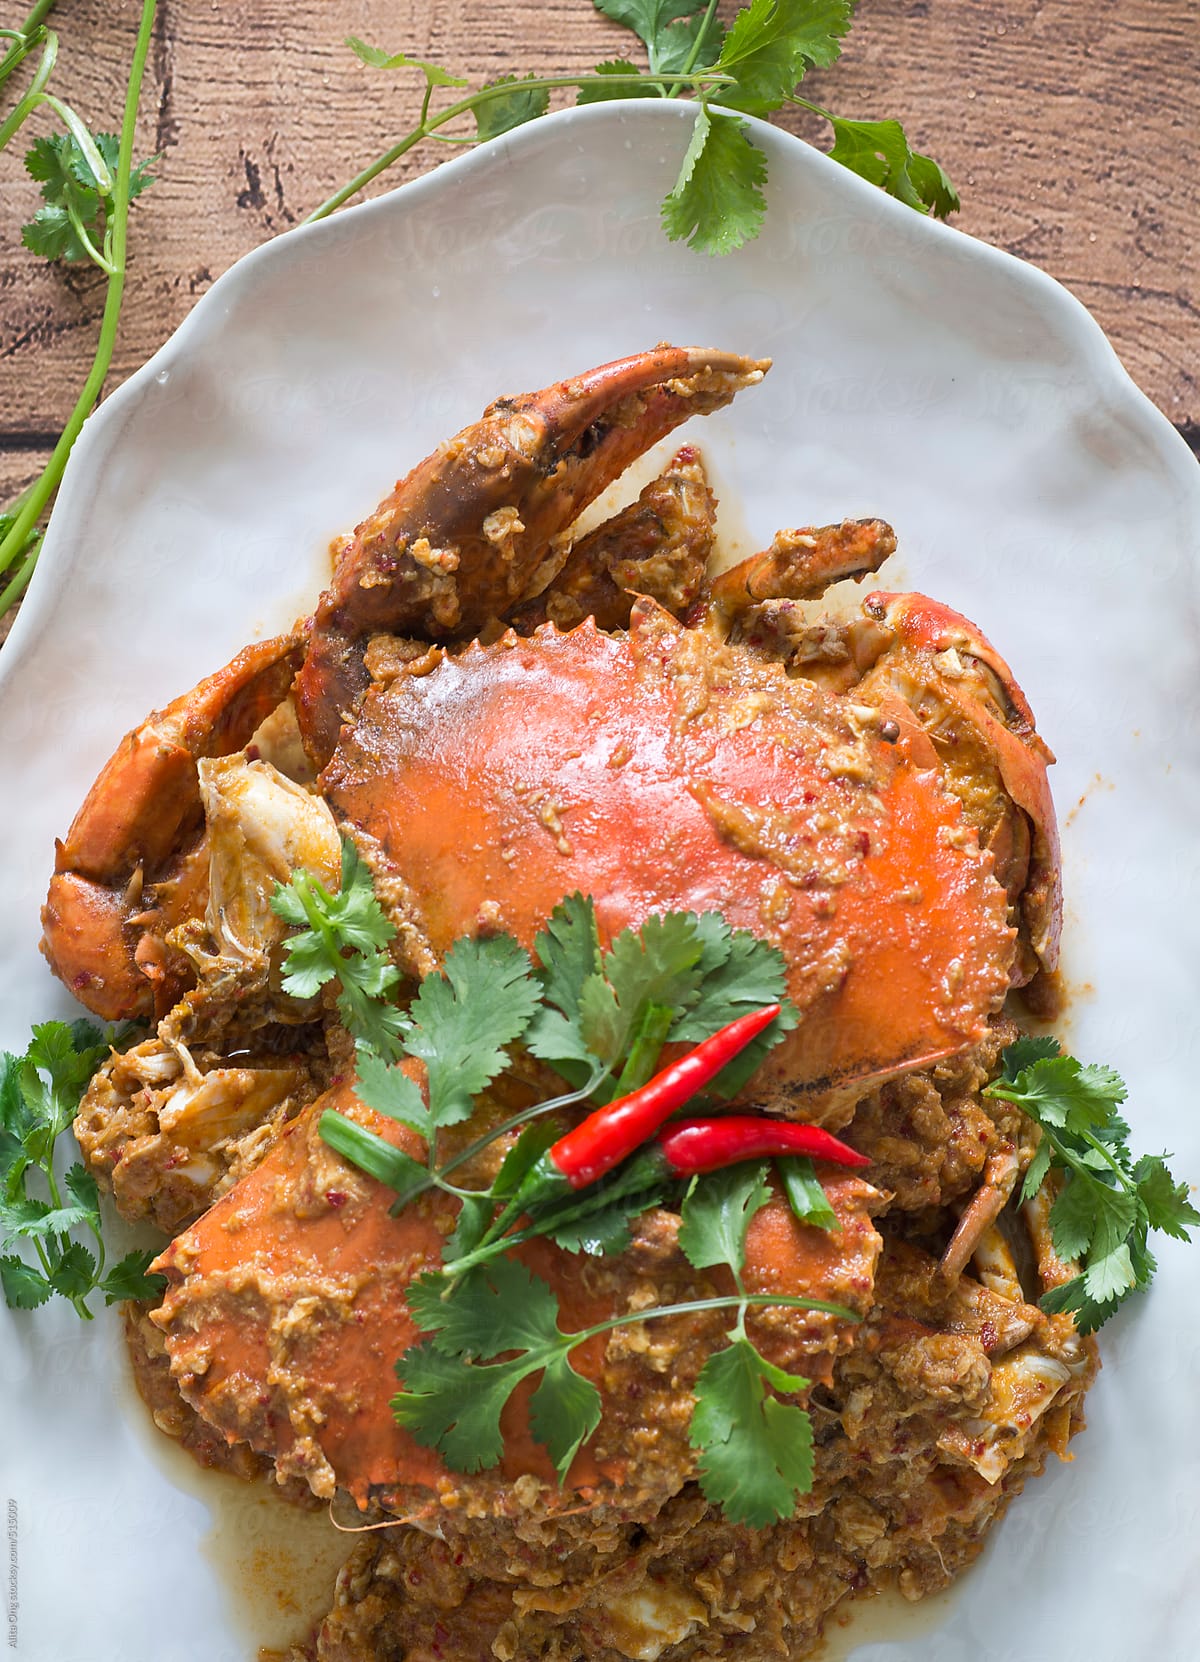 Singapore chili crab